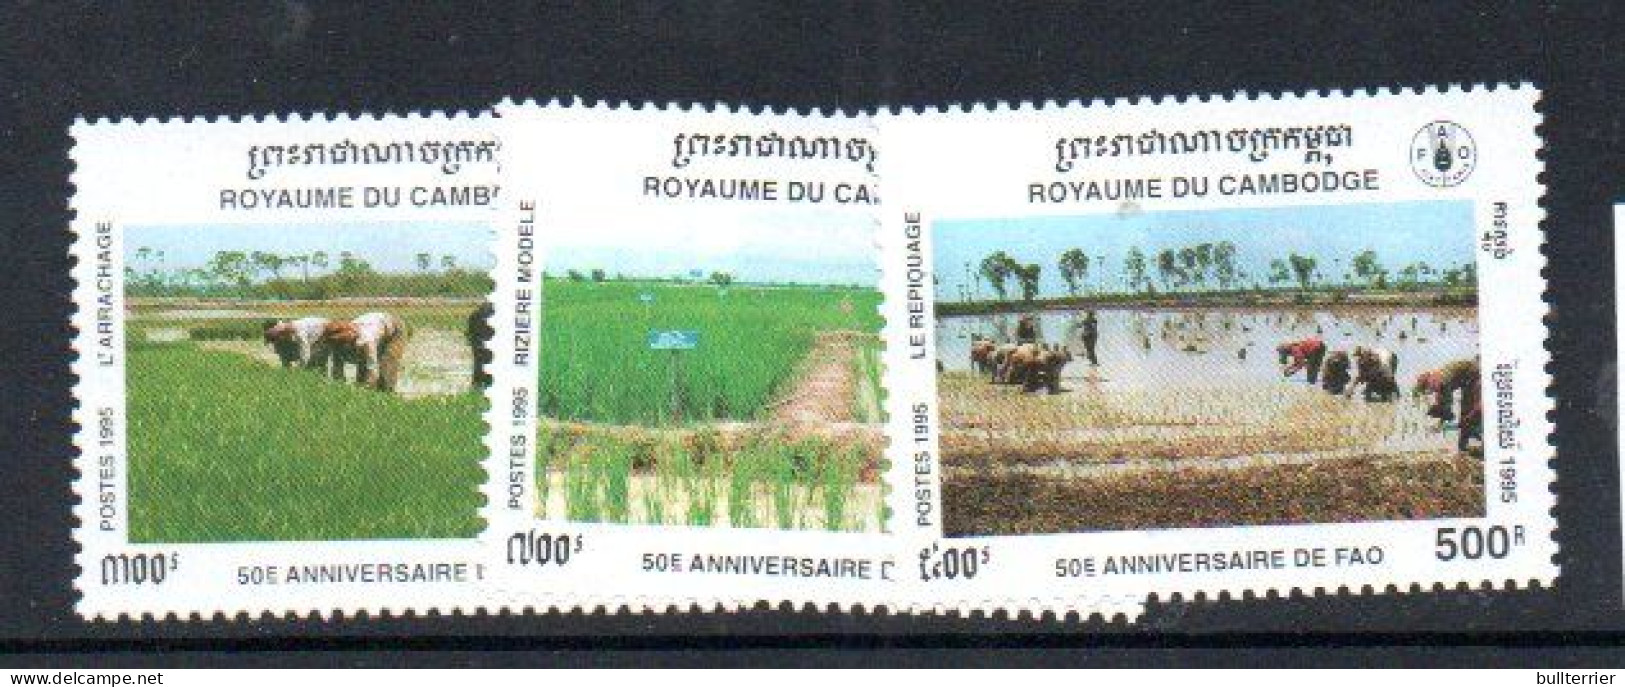 CAMBODIA - 1995 - FAO ANNIVERSARY SET OF 2  MINT NEVER HINGED - Cambodge